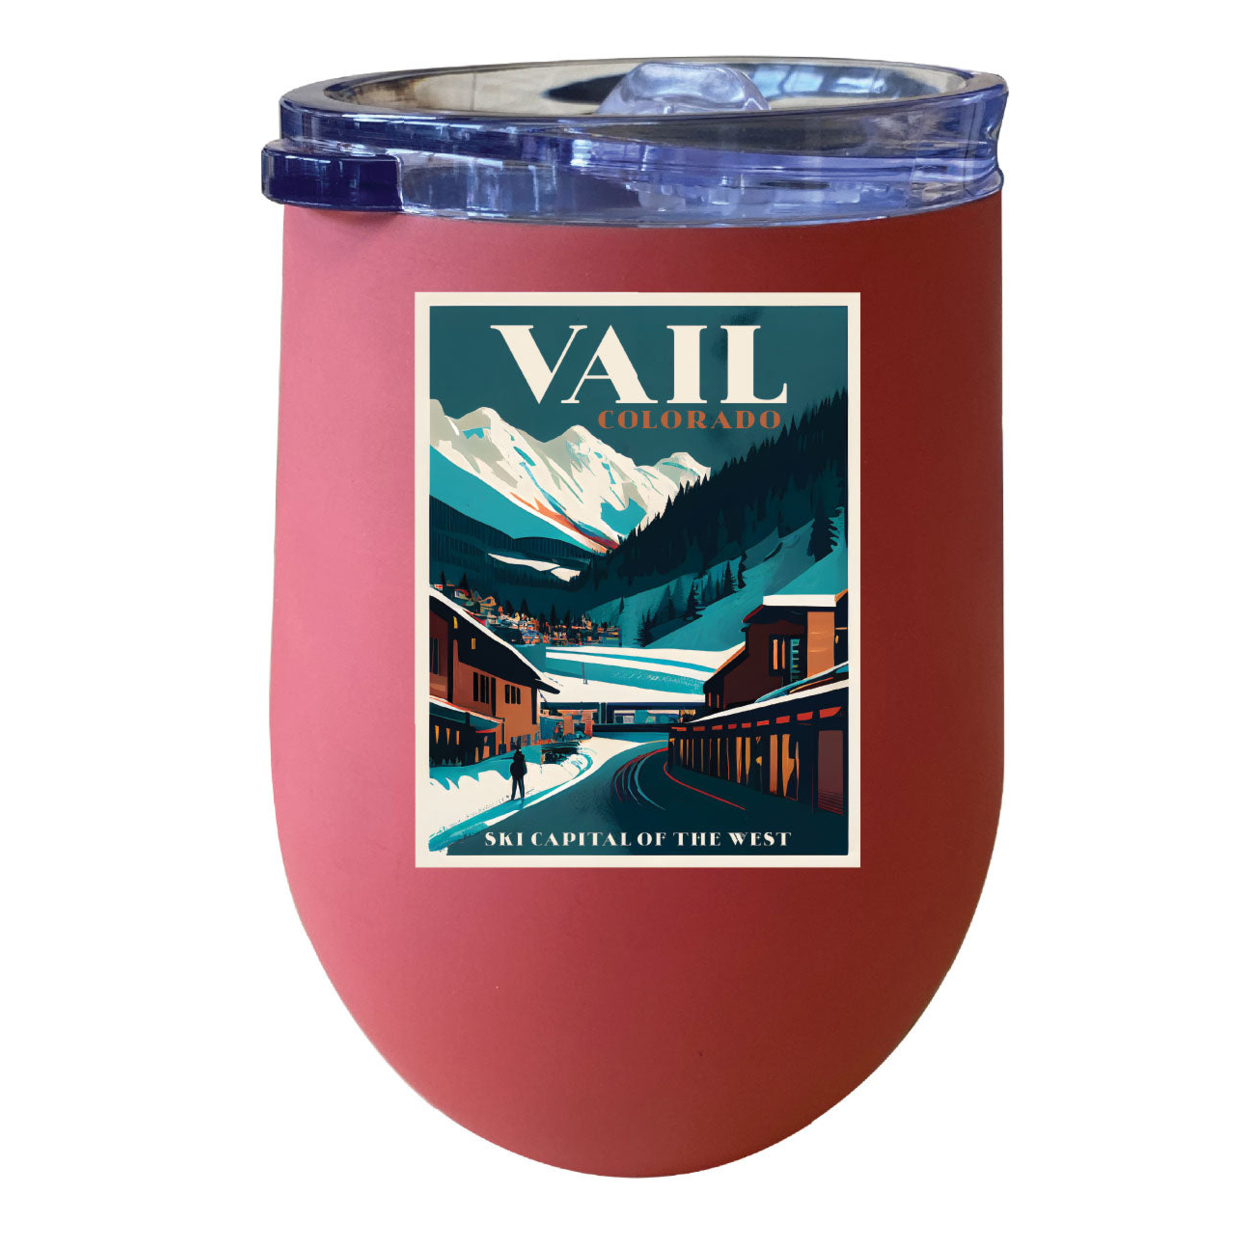 Vail Colorado Souvenir 12 Oz Insulated Wine Stainless Steel Tumbler - White